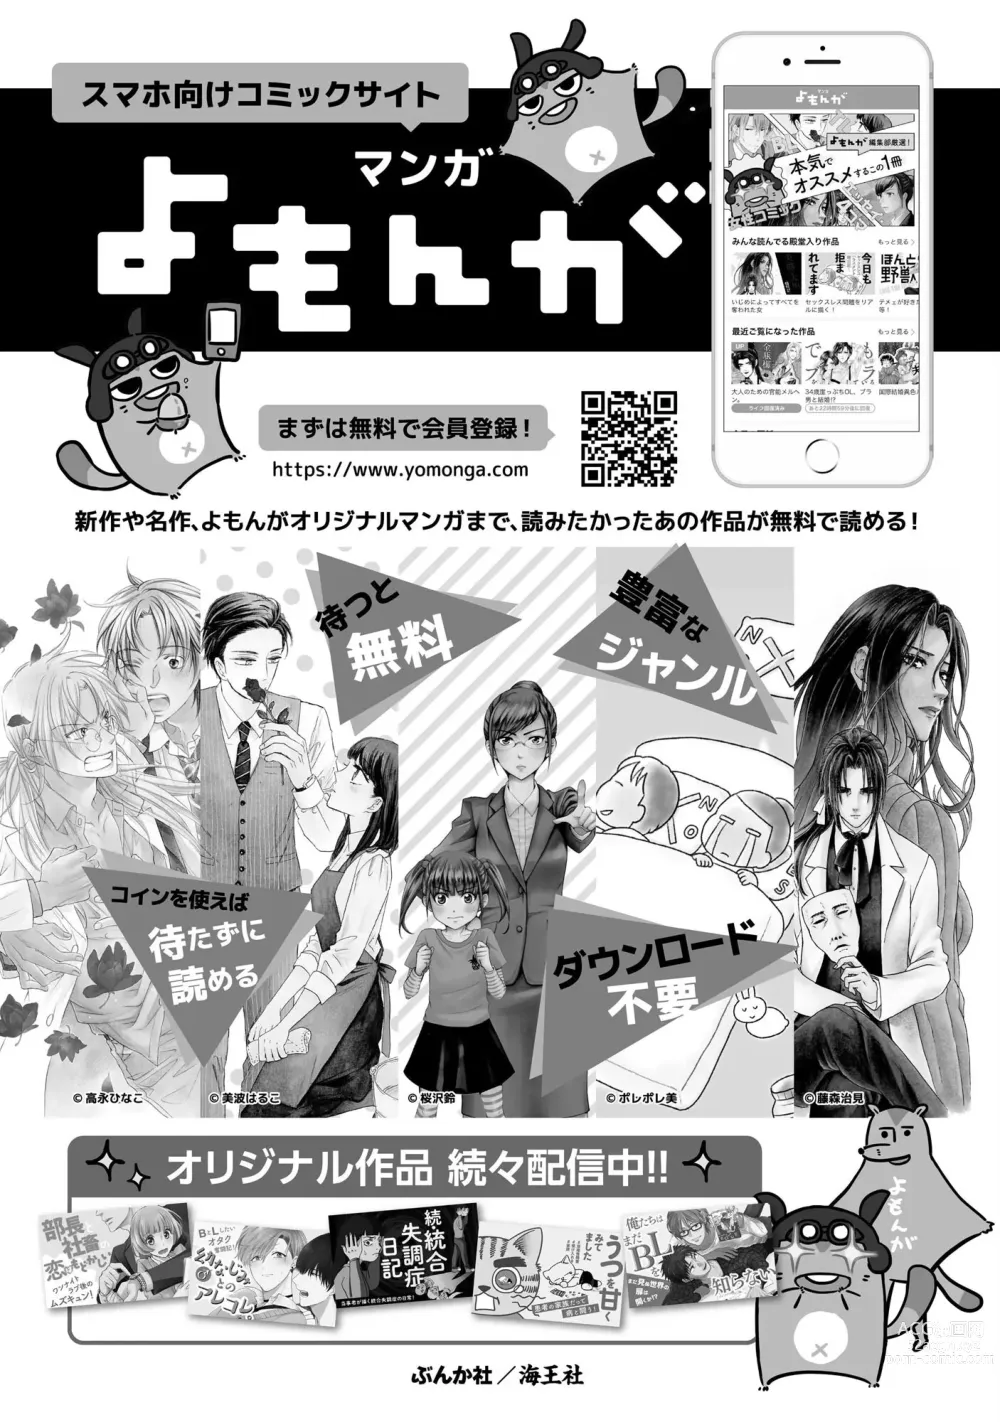 Page 190 of manga Haiboku Eiyuu, Ryoujoku